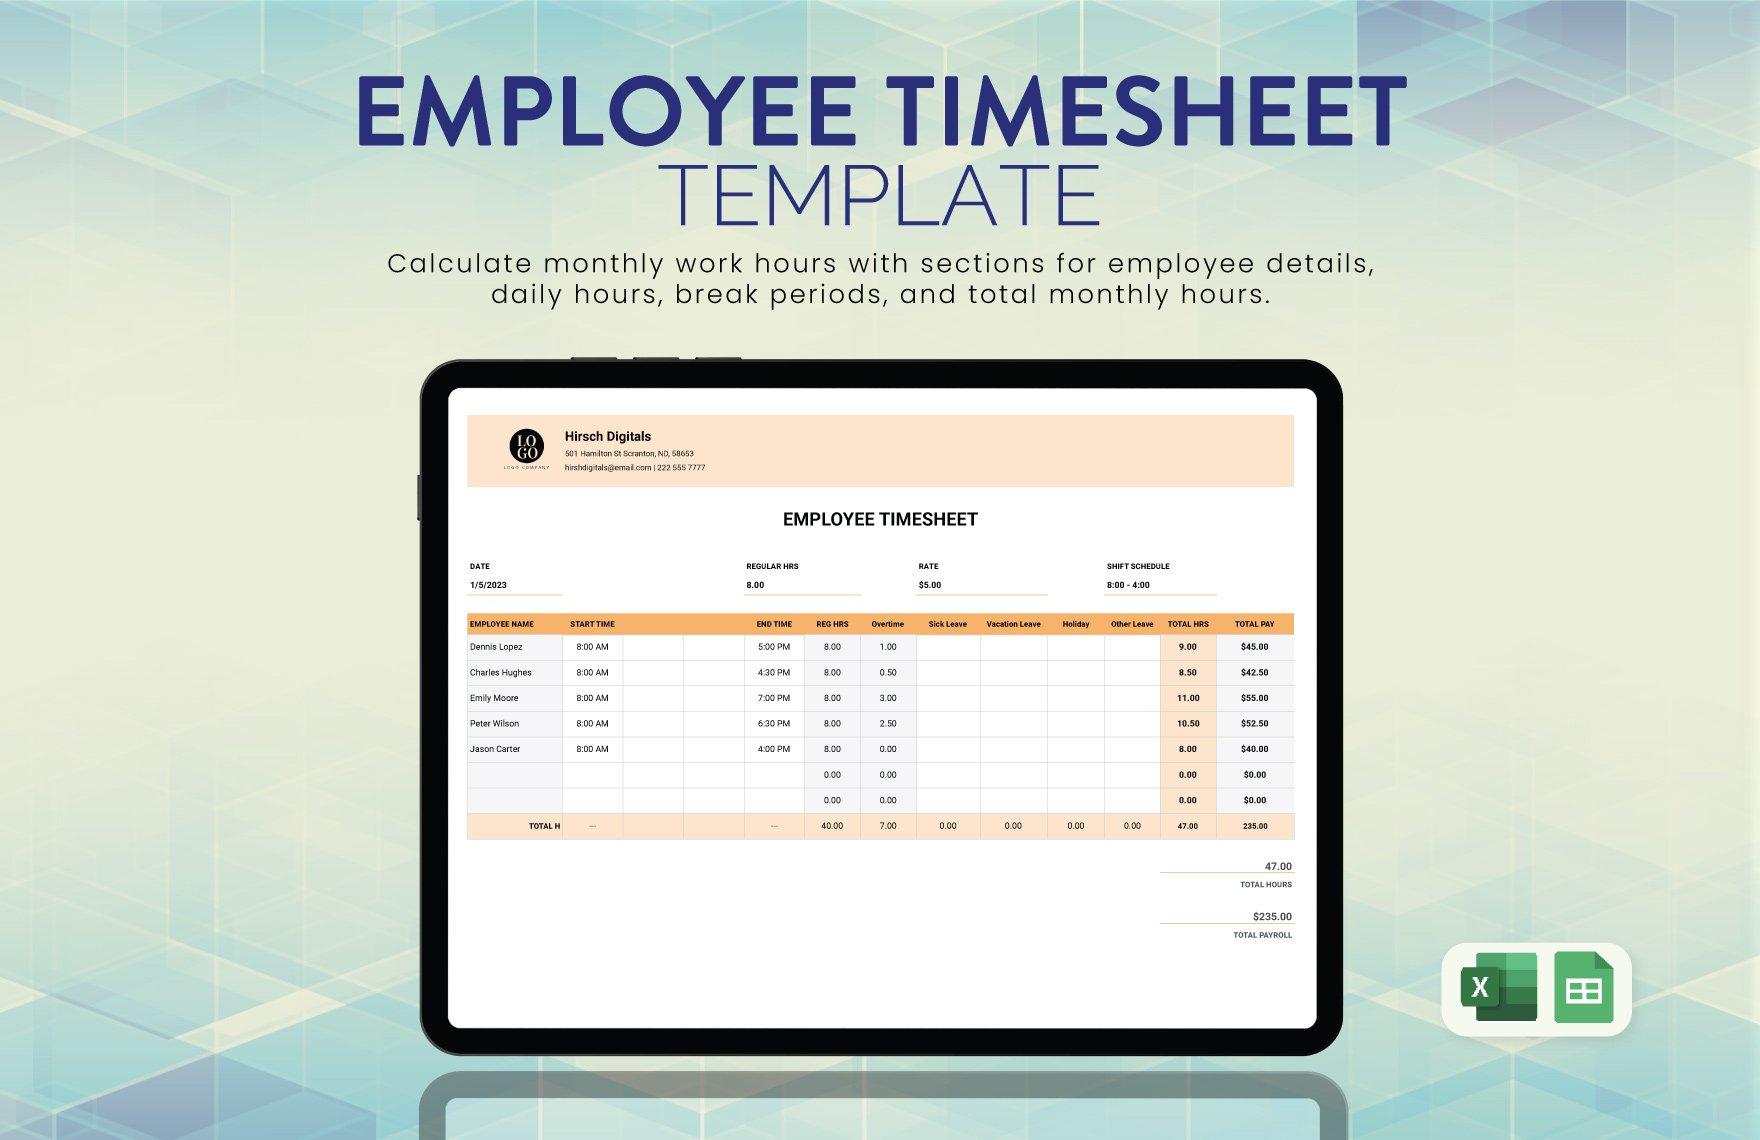 Employee Timesheet in Excel, Google Sheets